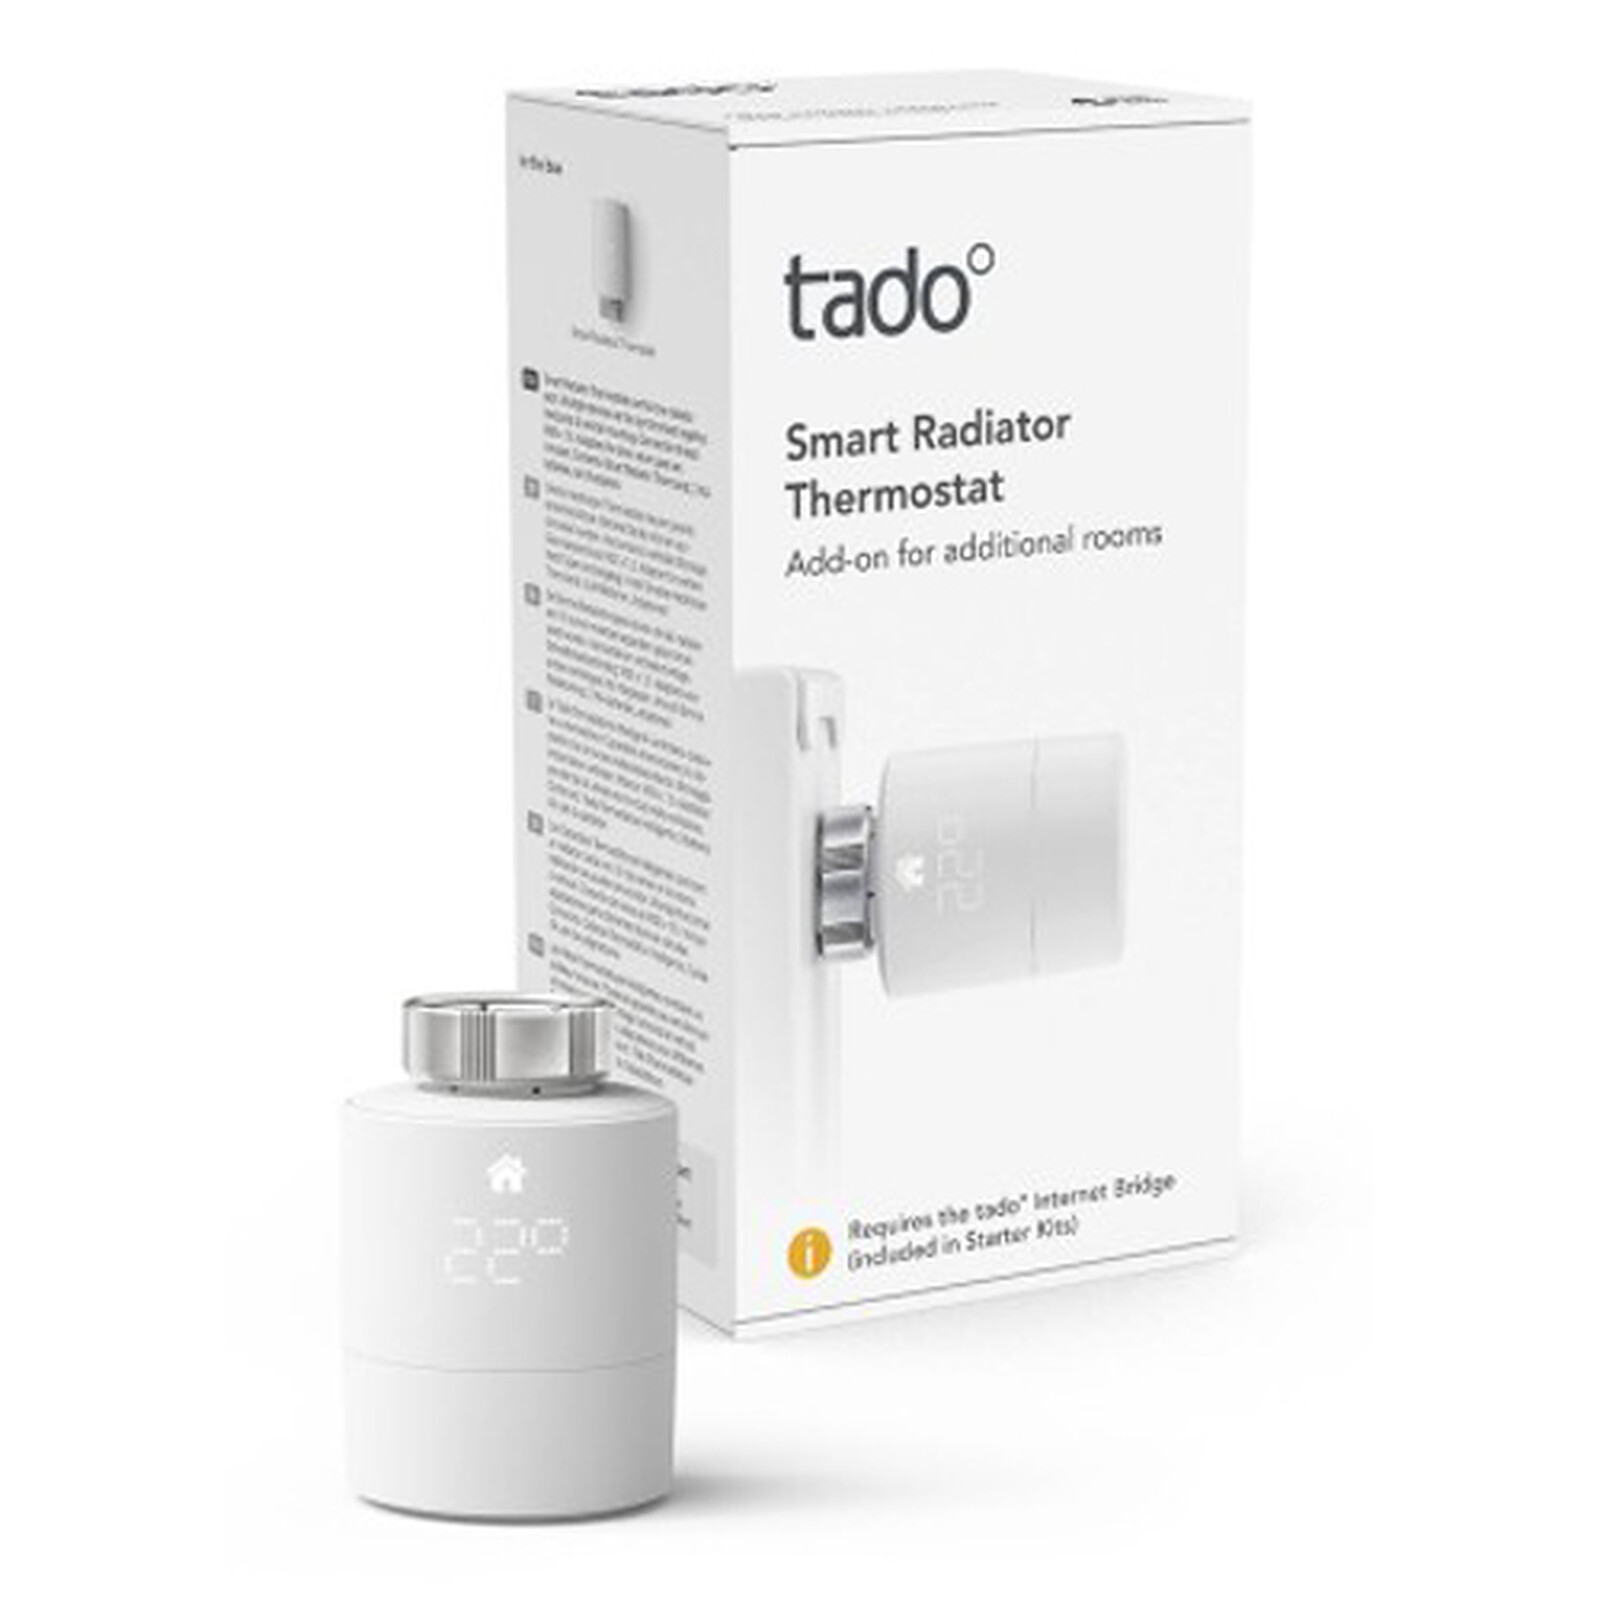 Cabezal Inteligente Duo Pack Basic Tado